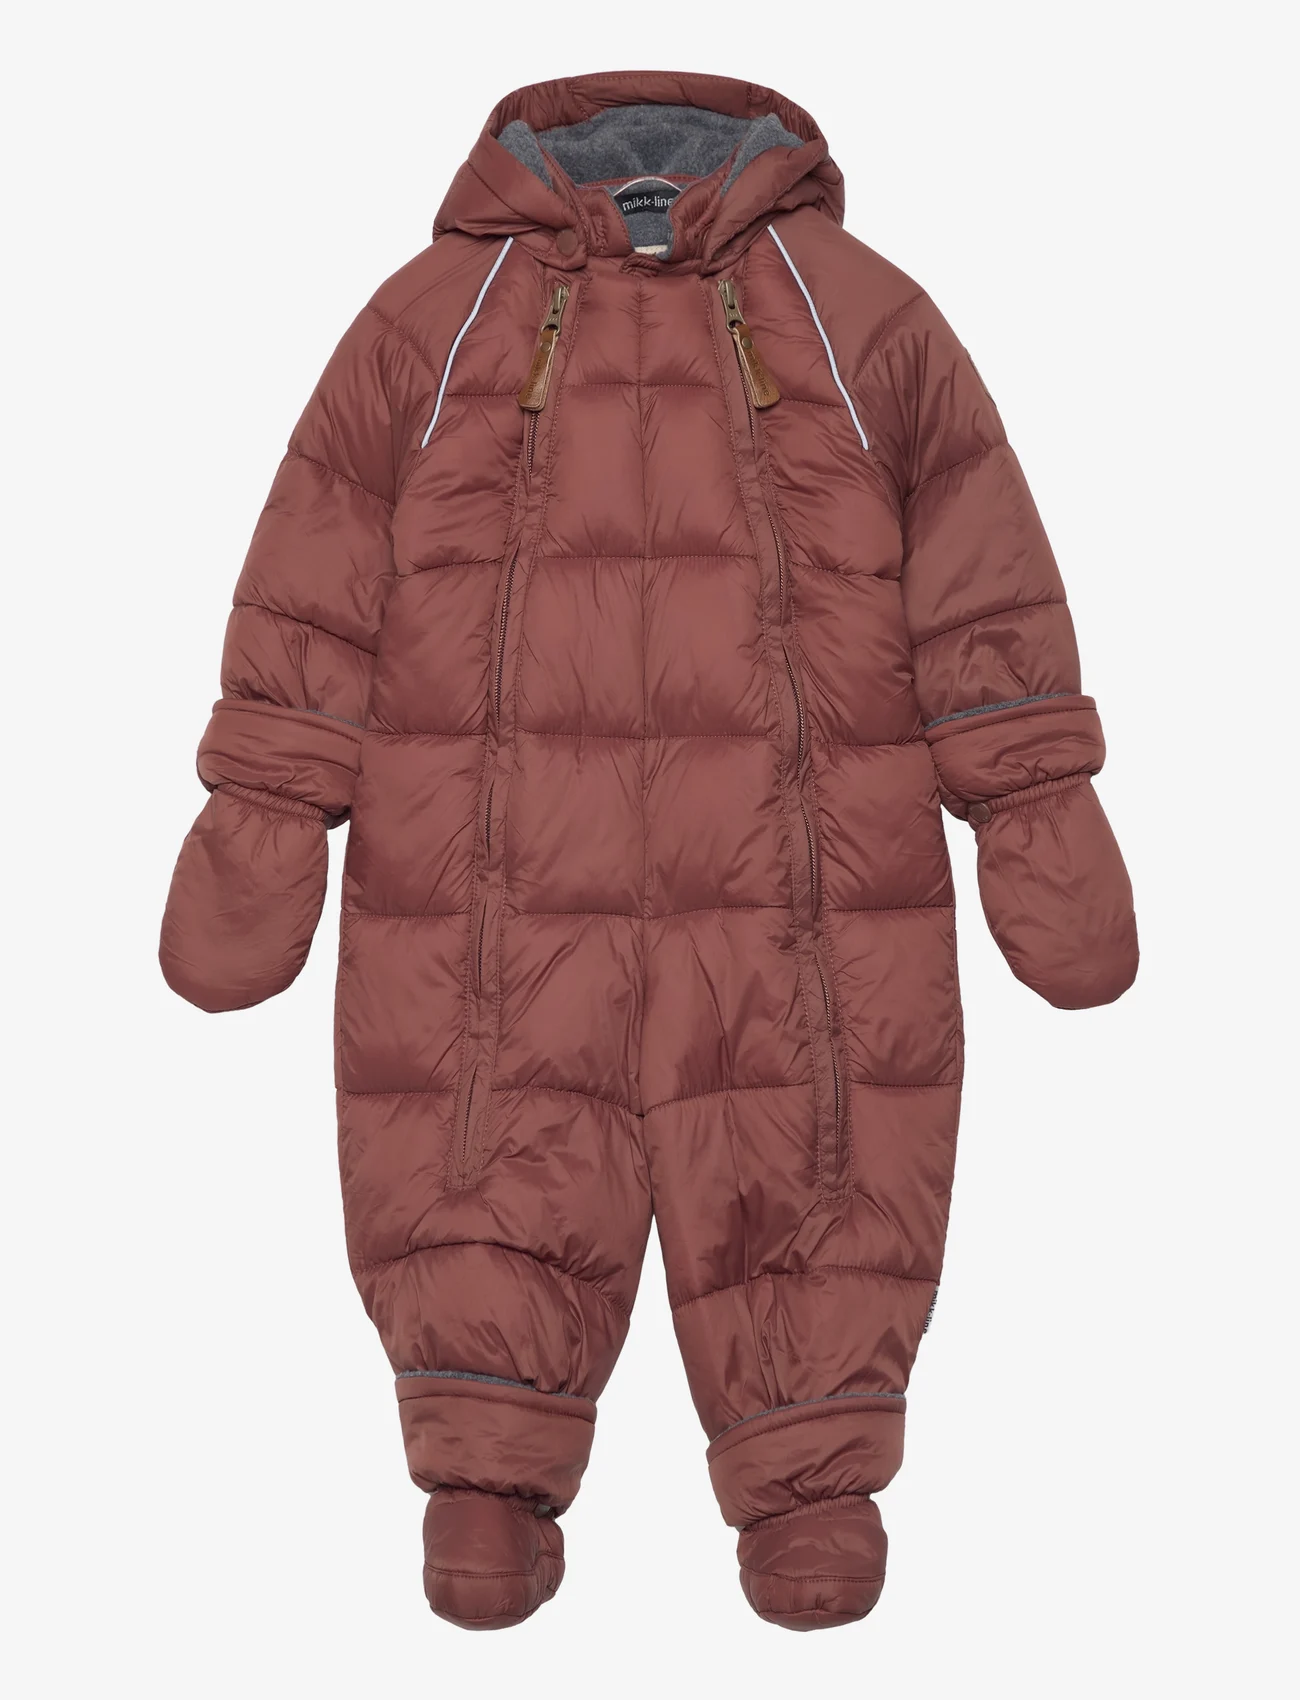 mikk-line - Puff Baby Suit w Acc Rec. - vinterdress - mink - 0